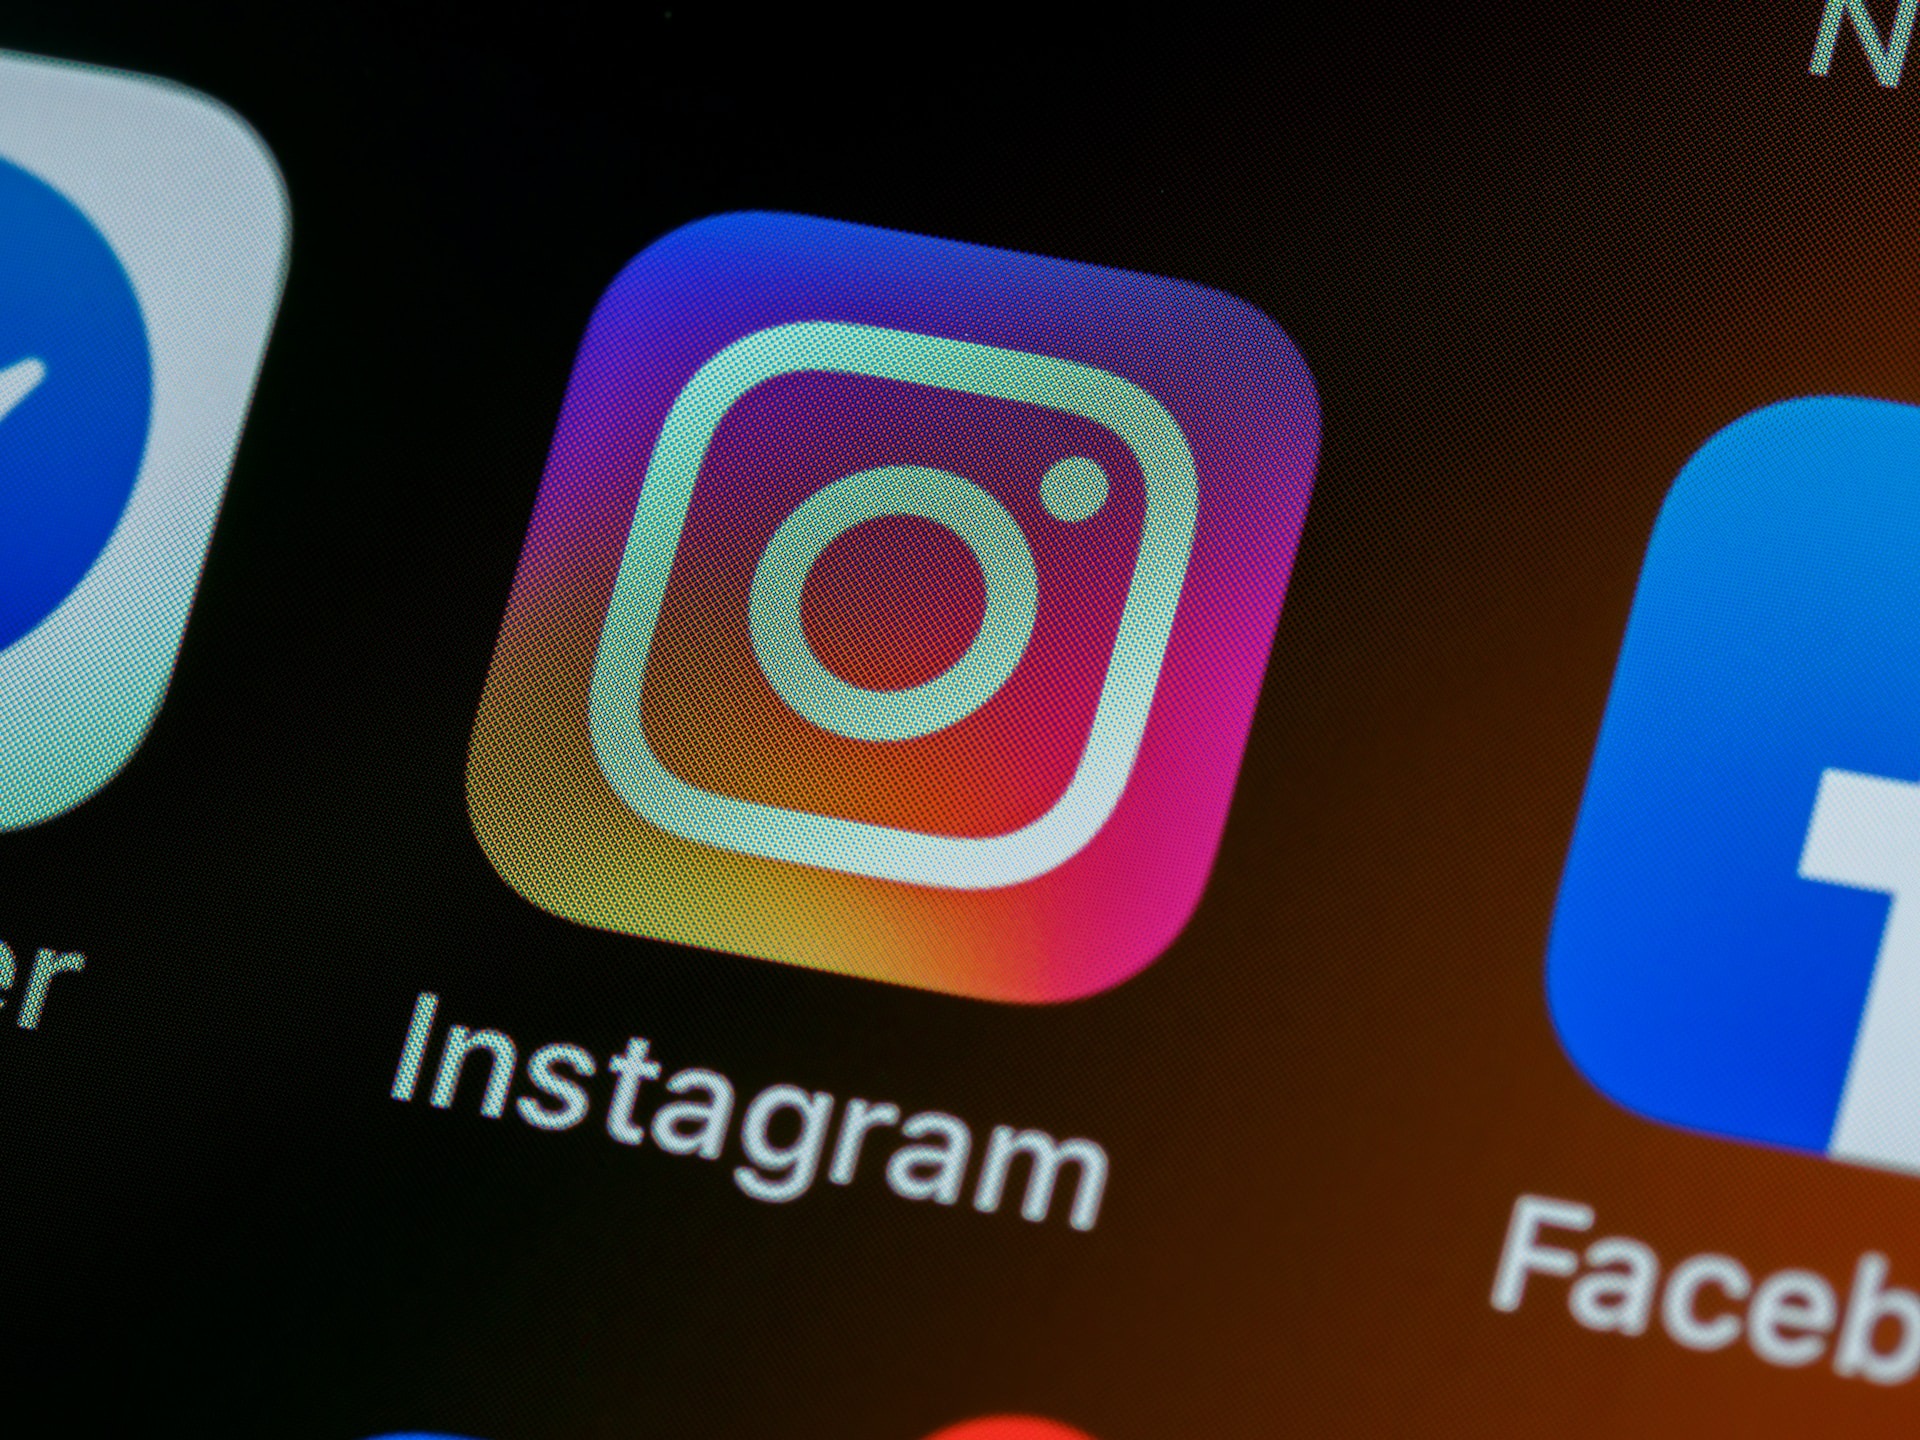 Instagram Reels tops TikTok and Facebook for branded video content, report reveals